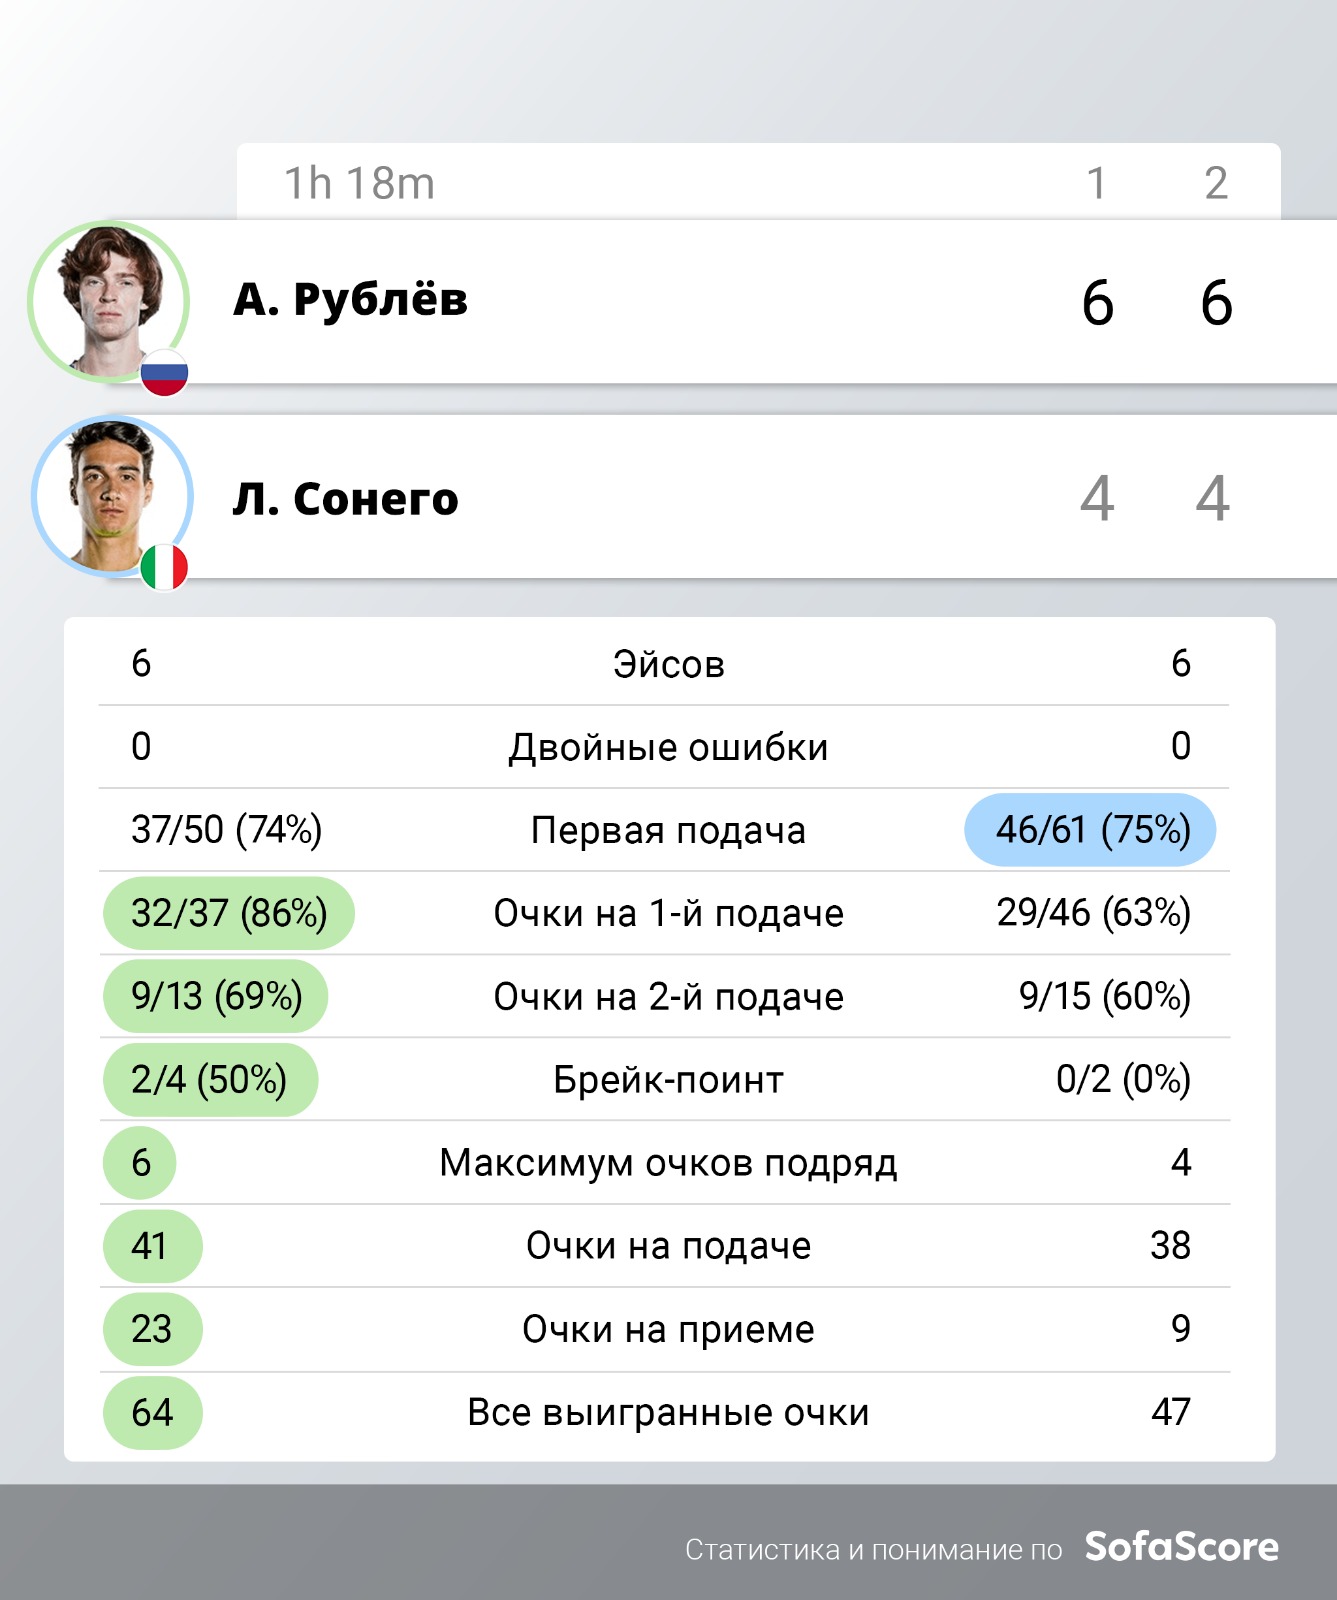 Теннисист Рублев взял титул в Вене и квалифицировался на итоговый турнир